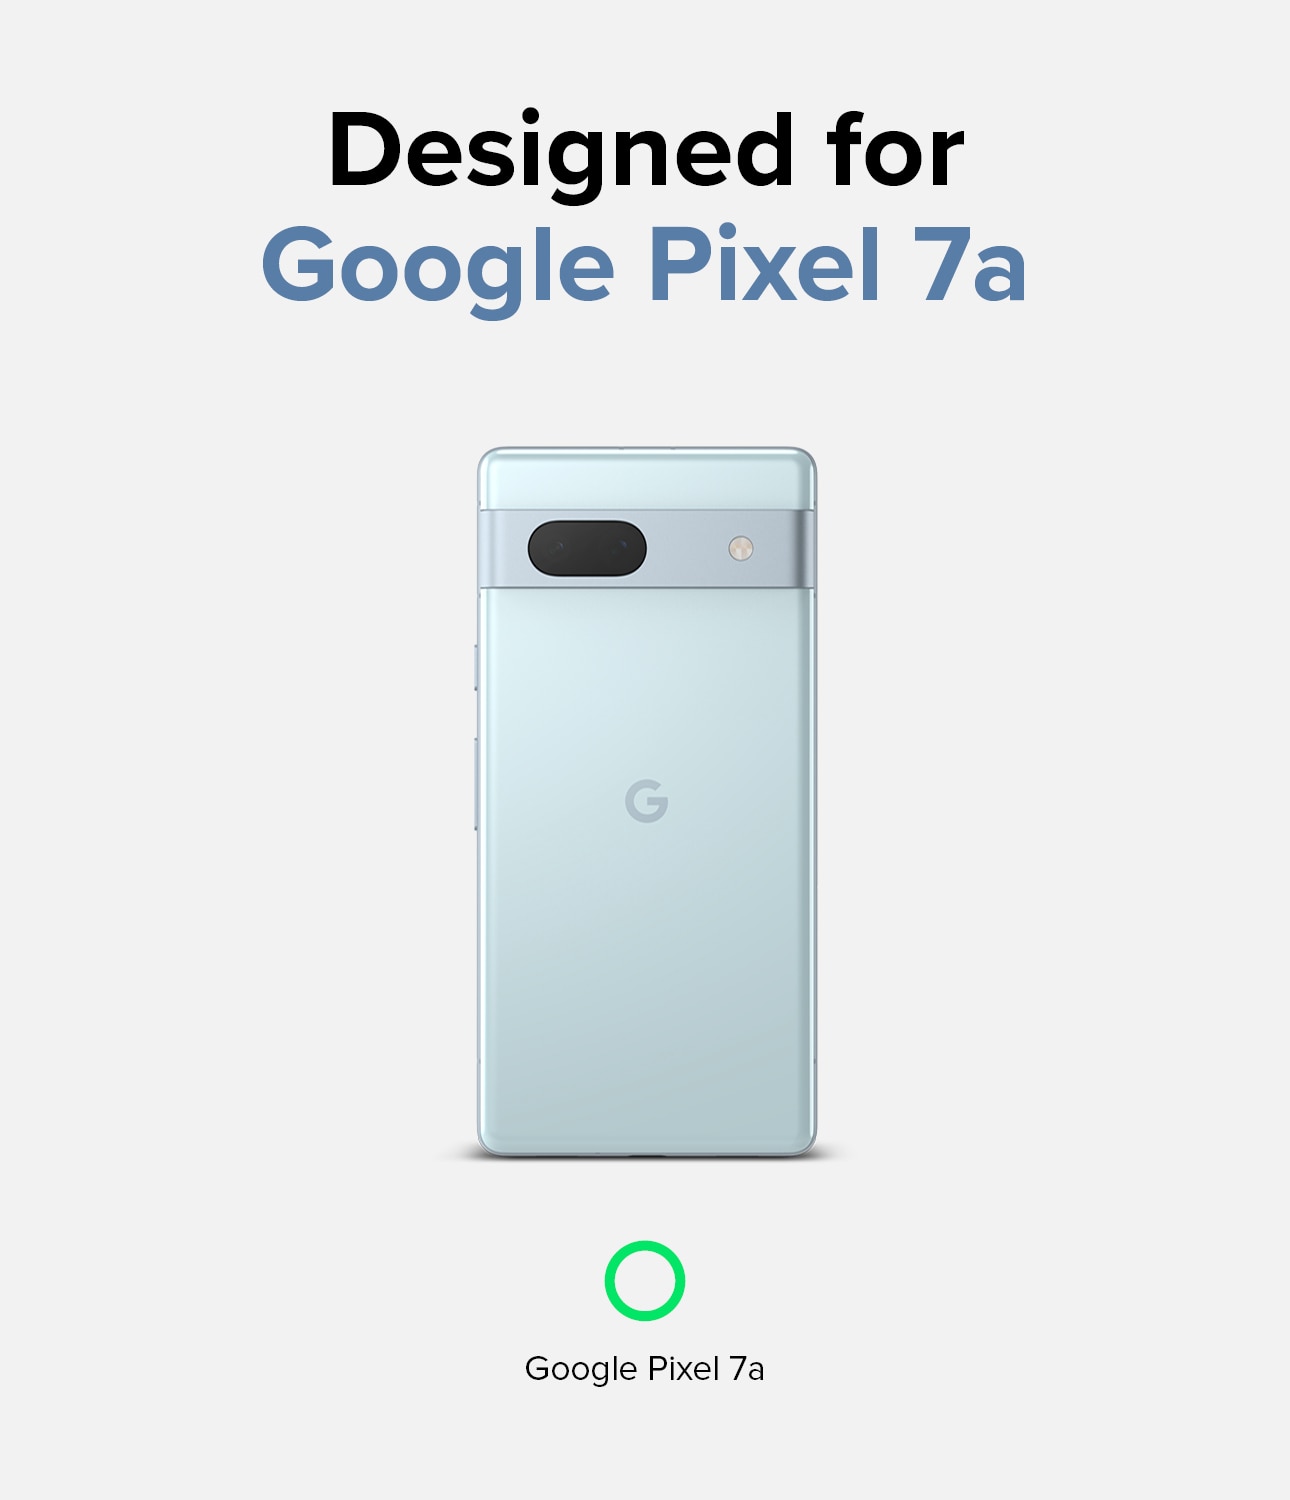 Funda Fusion Google Pixel 7a Clear